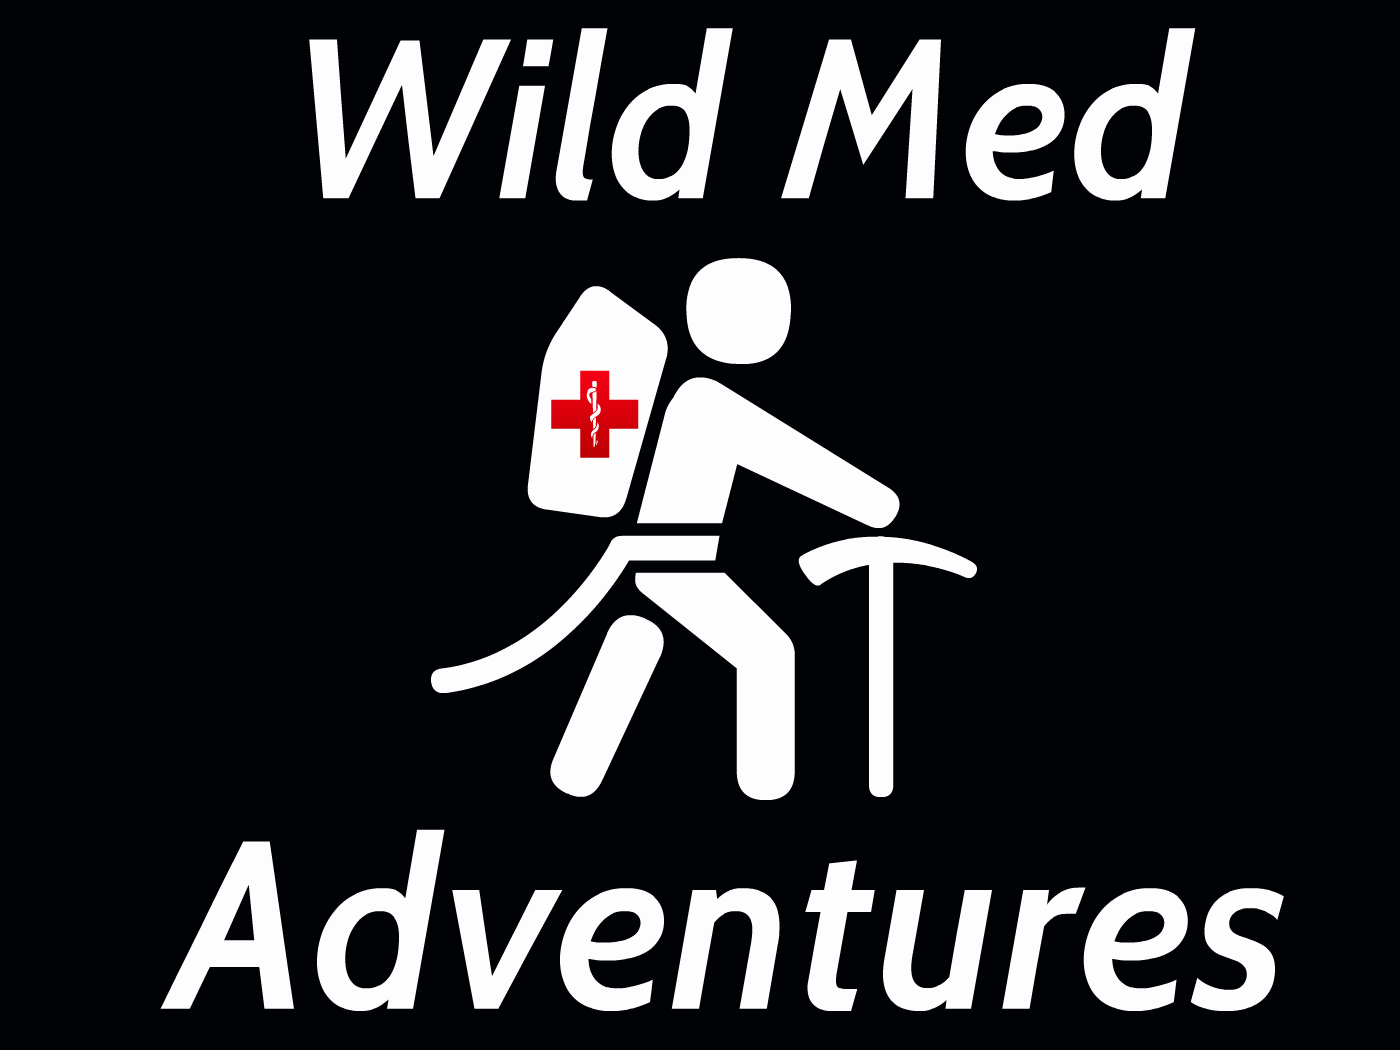 Wild Med Adventures